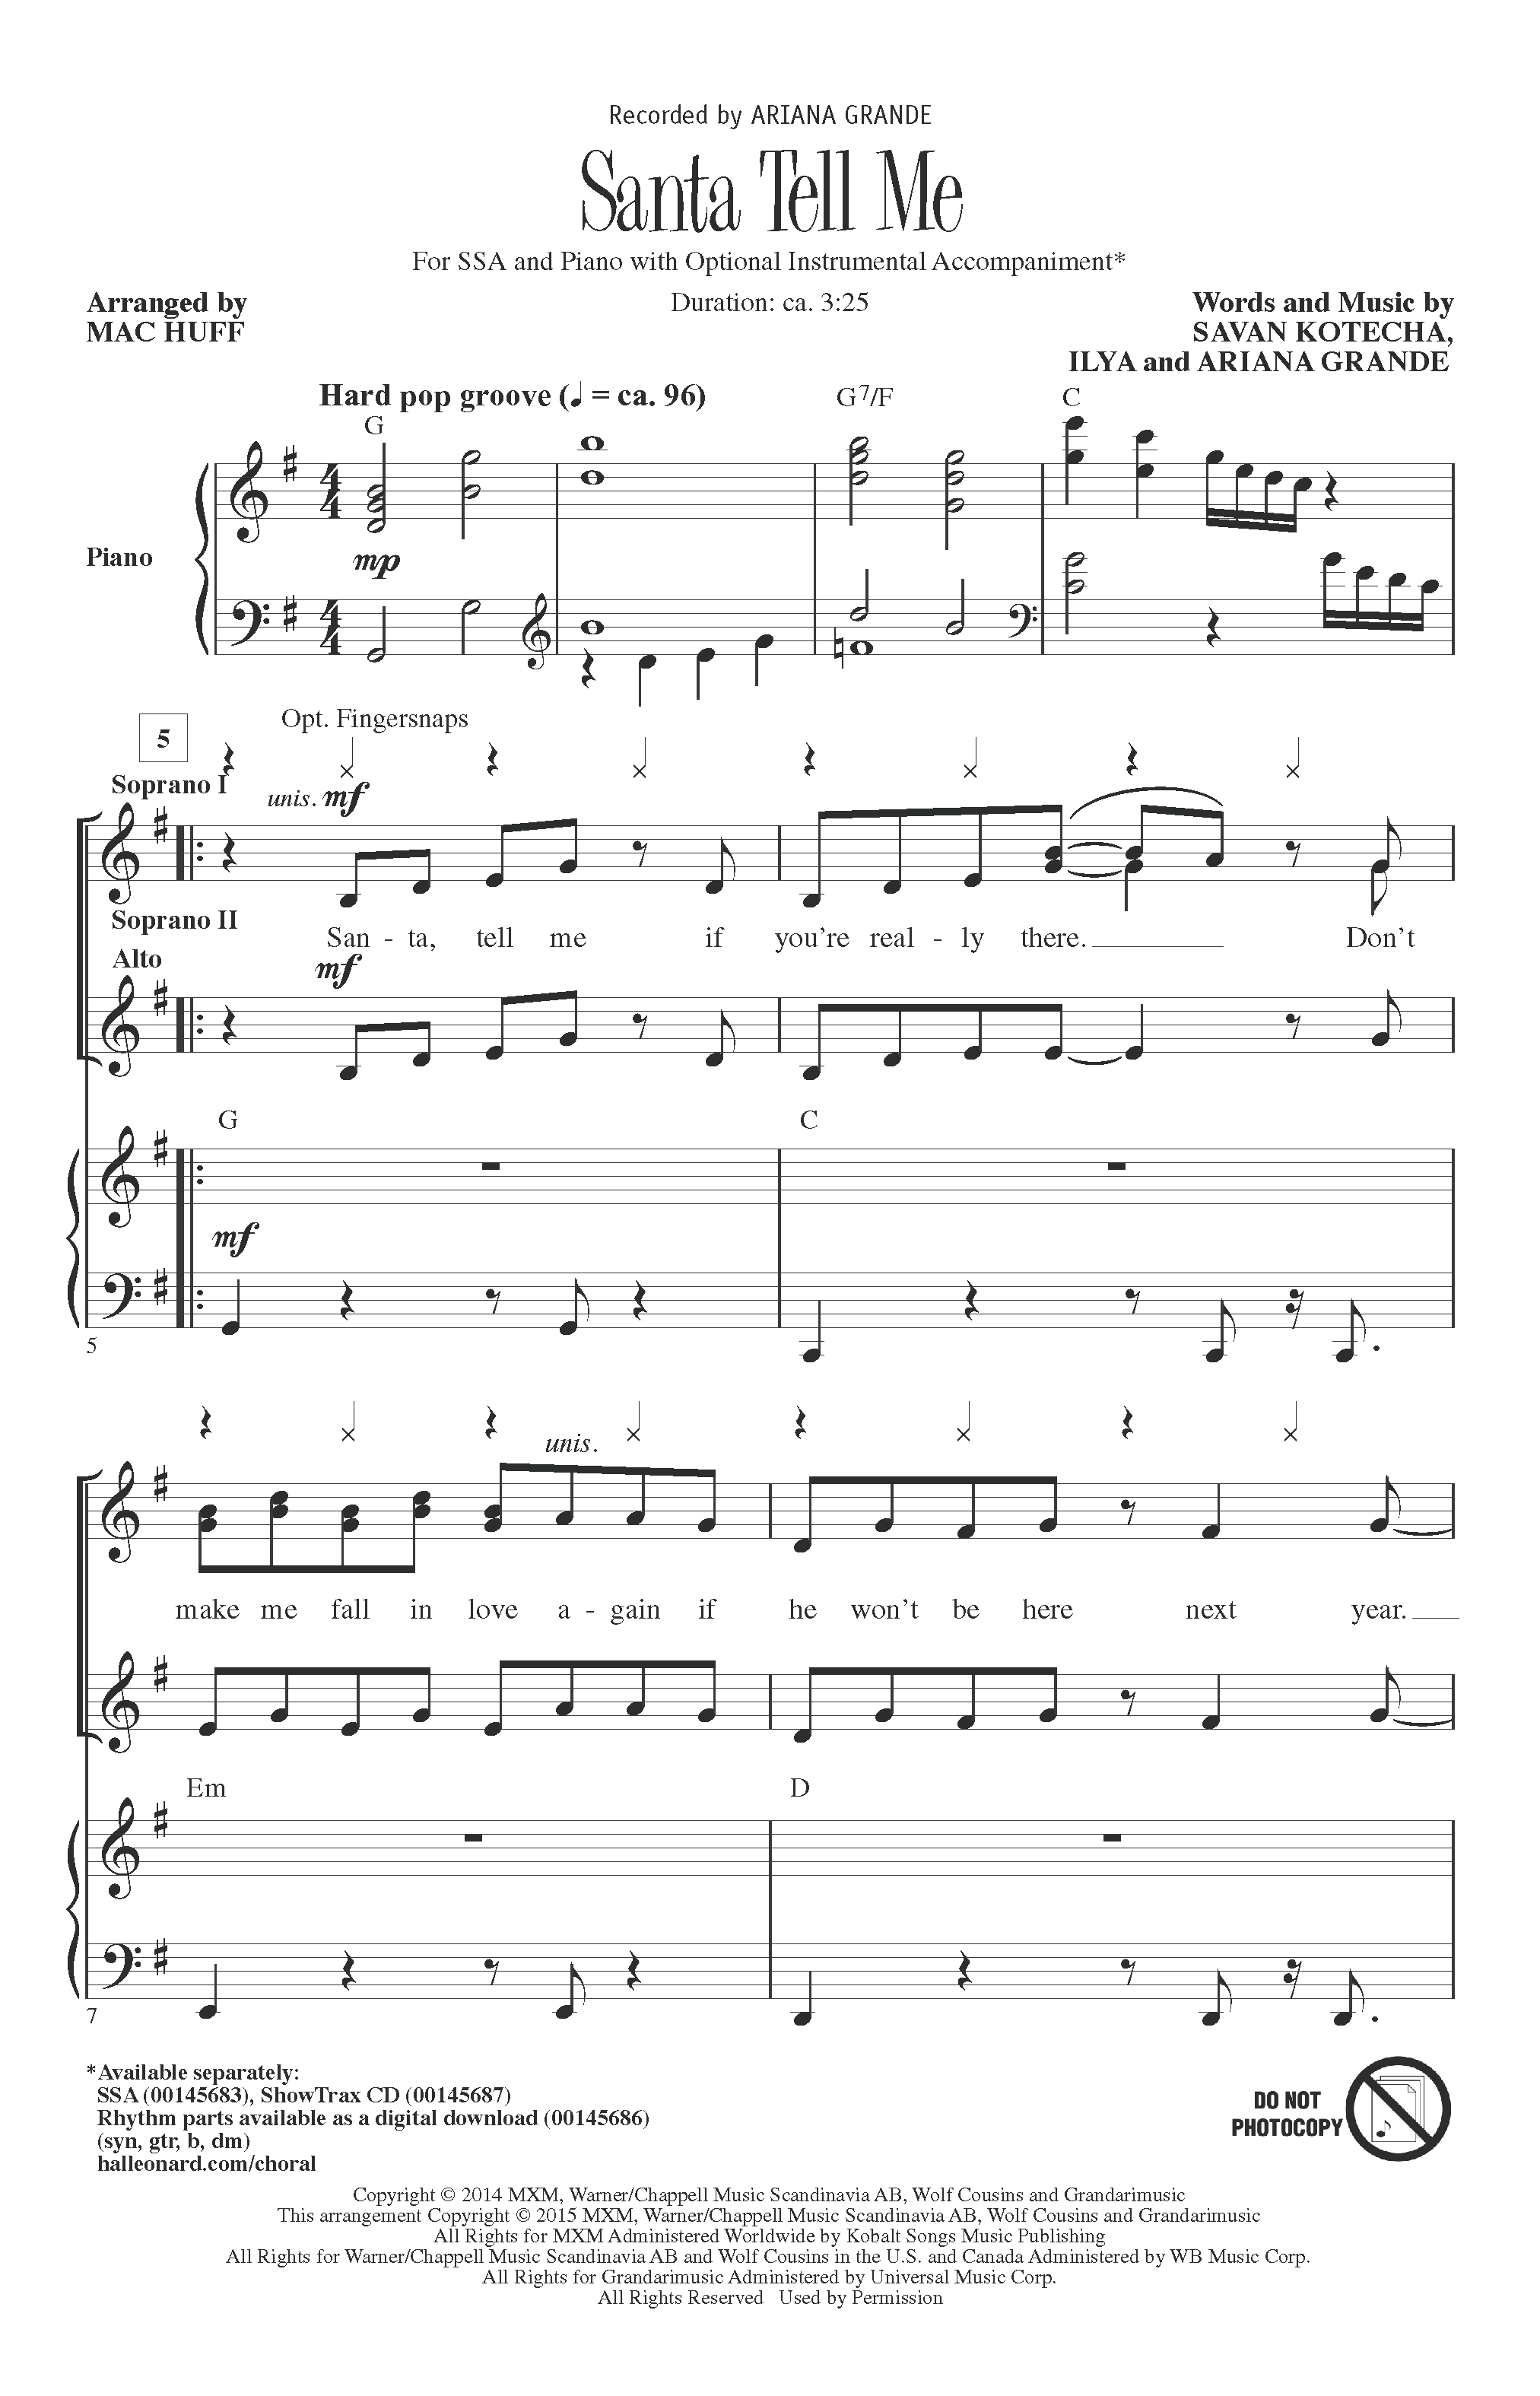 Ariana Grande Santa Tell Me (Arr. Mac Huff) Sheet Music Notes & Chords for SSA - Download or Print PDF